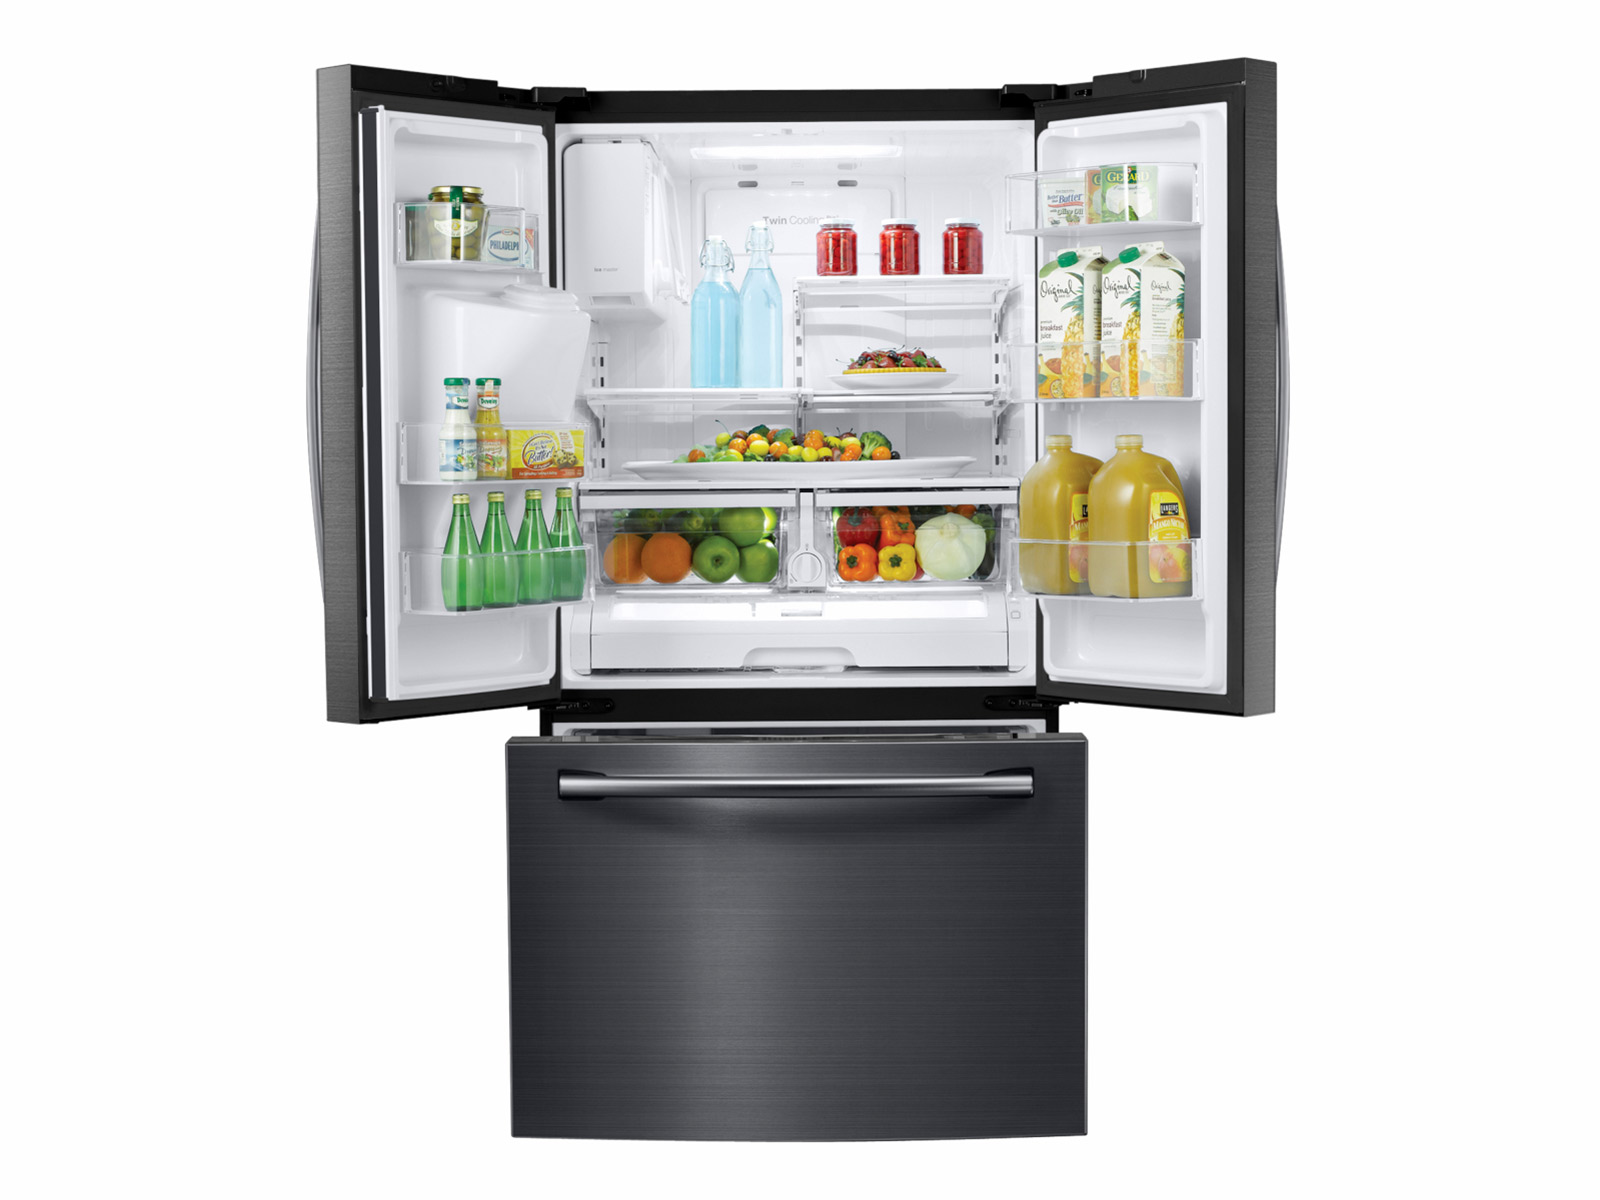 Французский холодильник. 42" Classic Side-by-Side Refrigerator/Freezer with Dispenser. Самсунг а25. Многокамерные френчдор. Холодильник 25 градусов